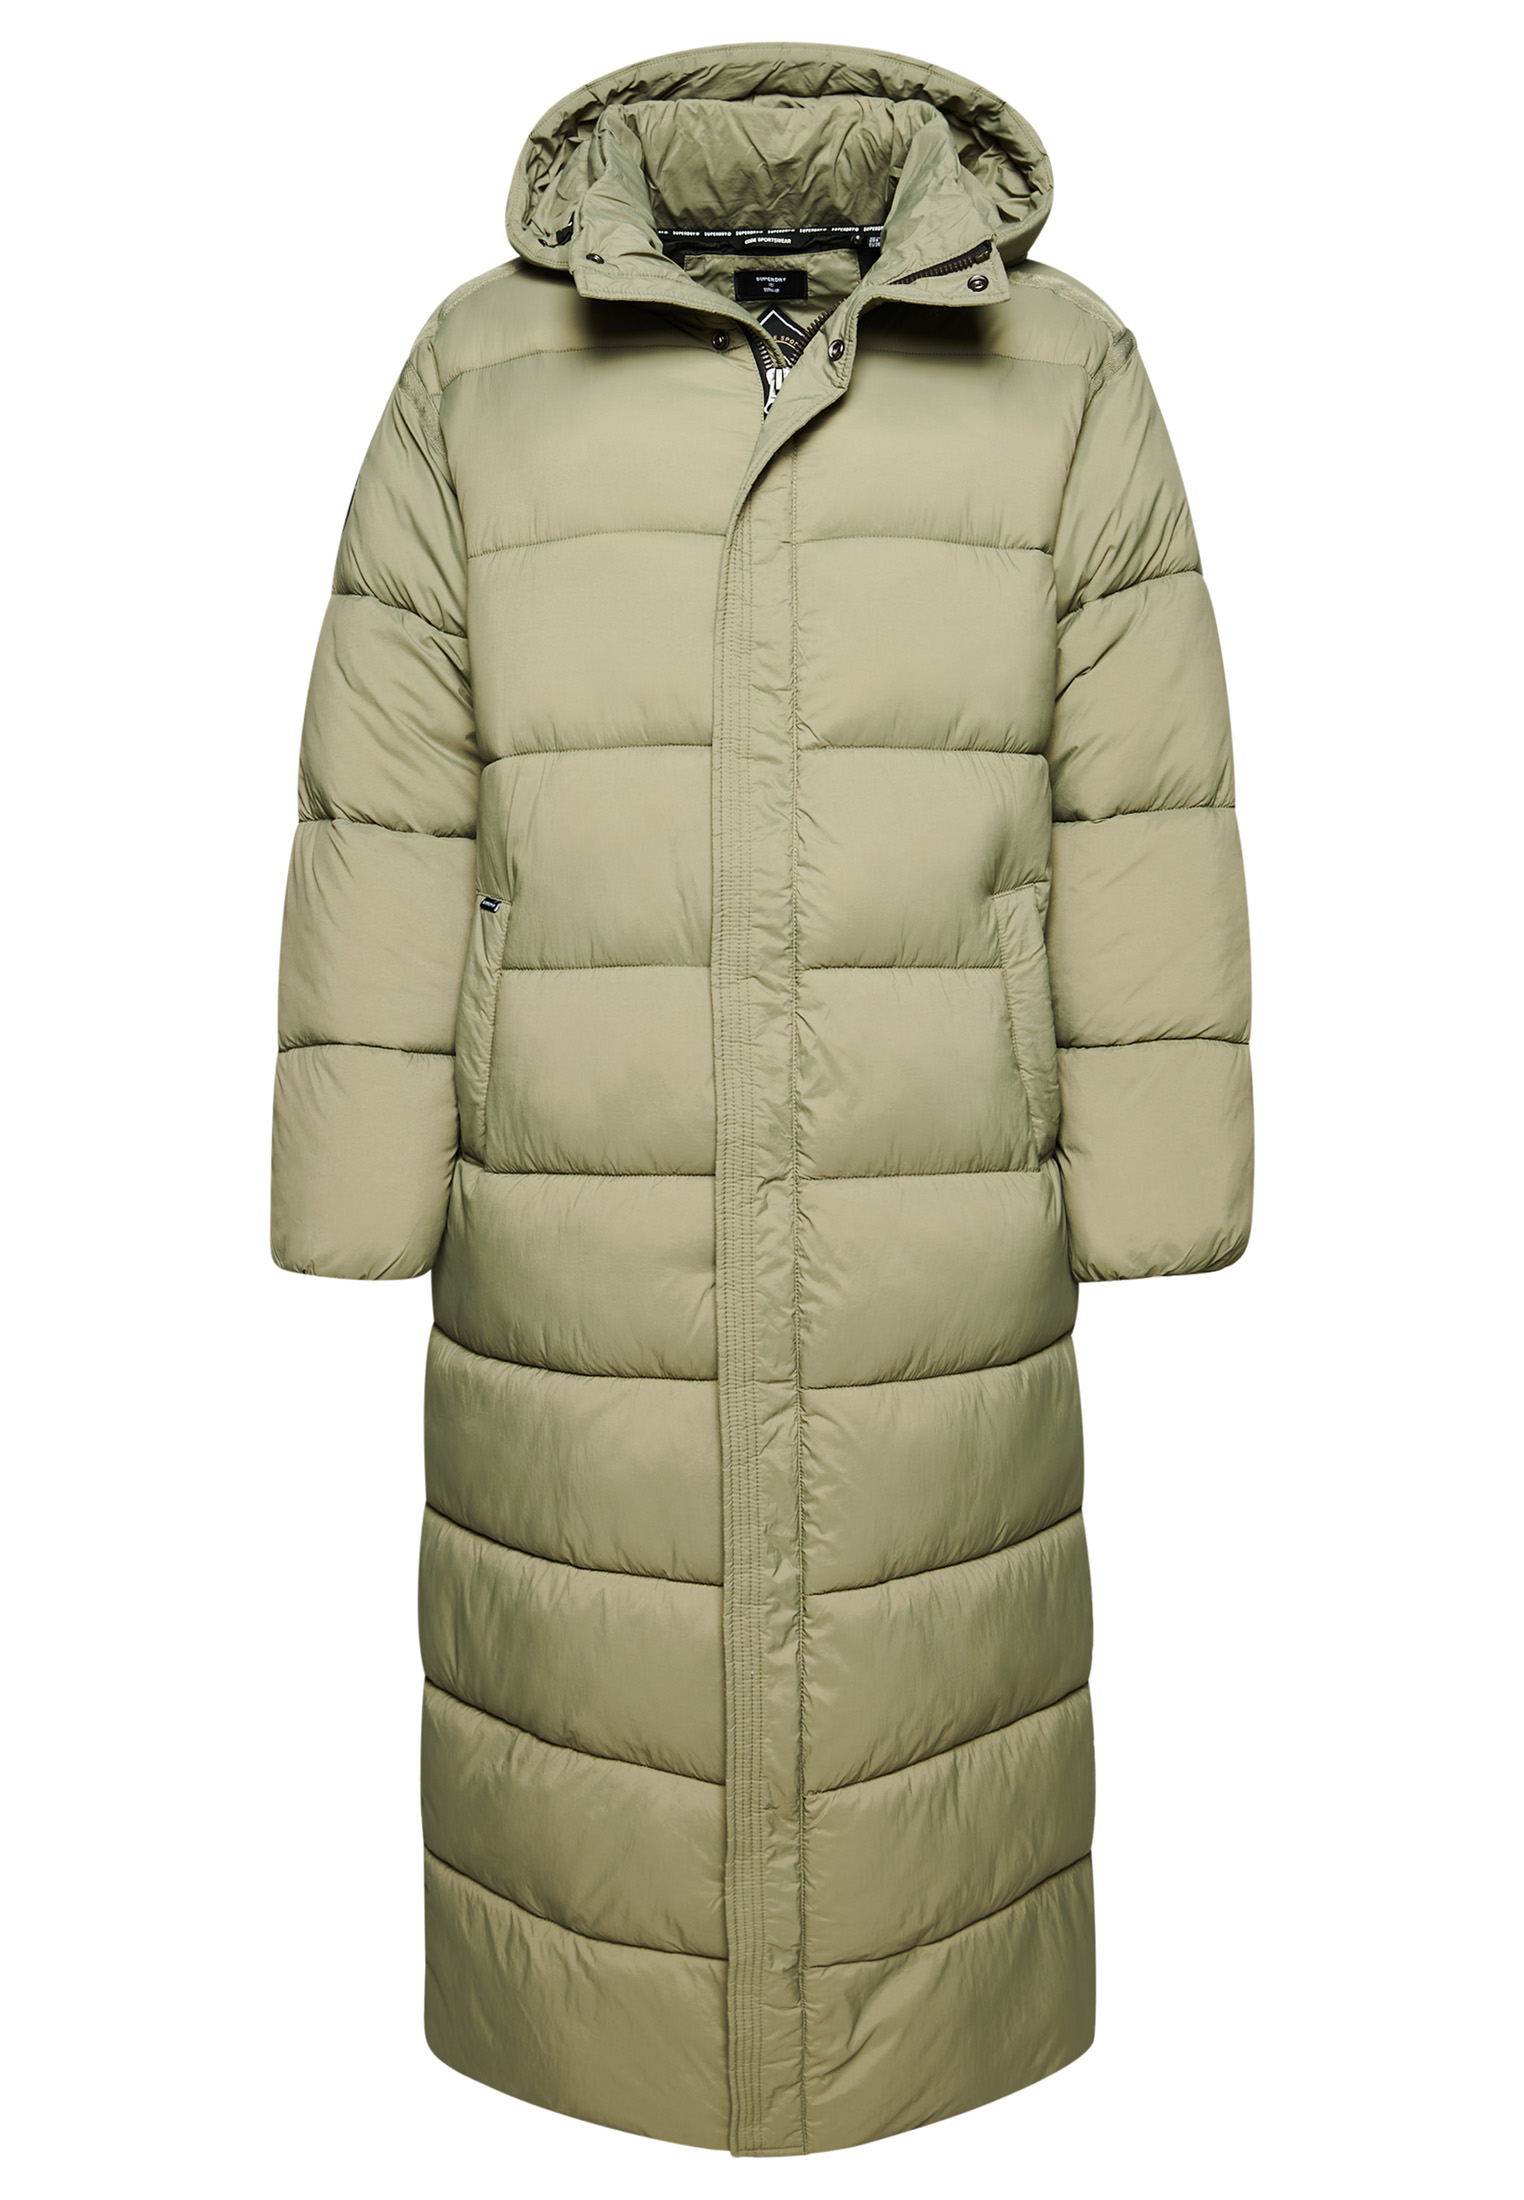 Superdry Womens Cocoon Longline Puffer Coat | eBay